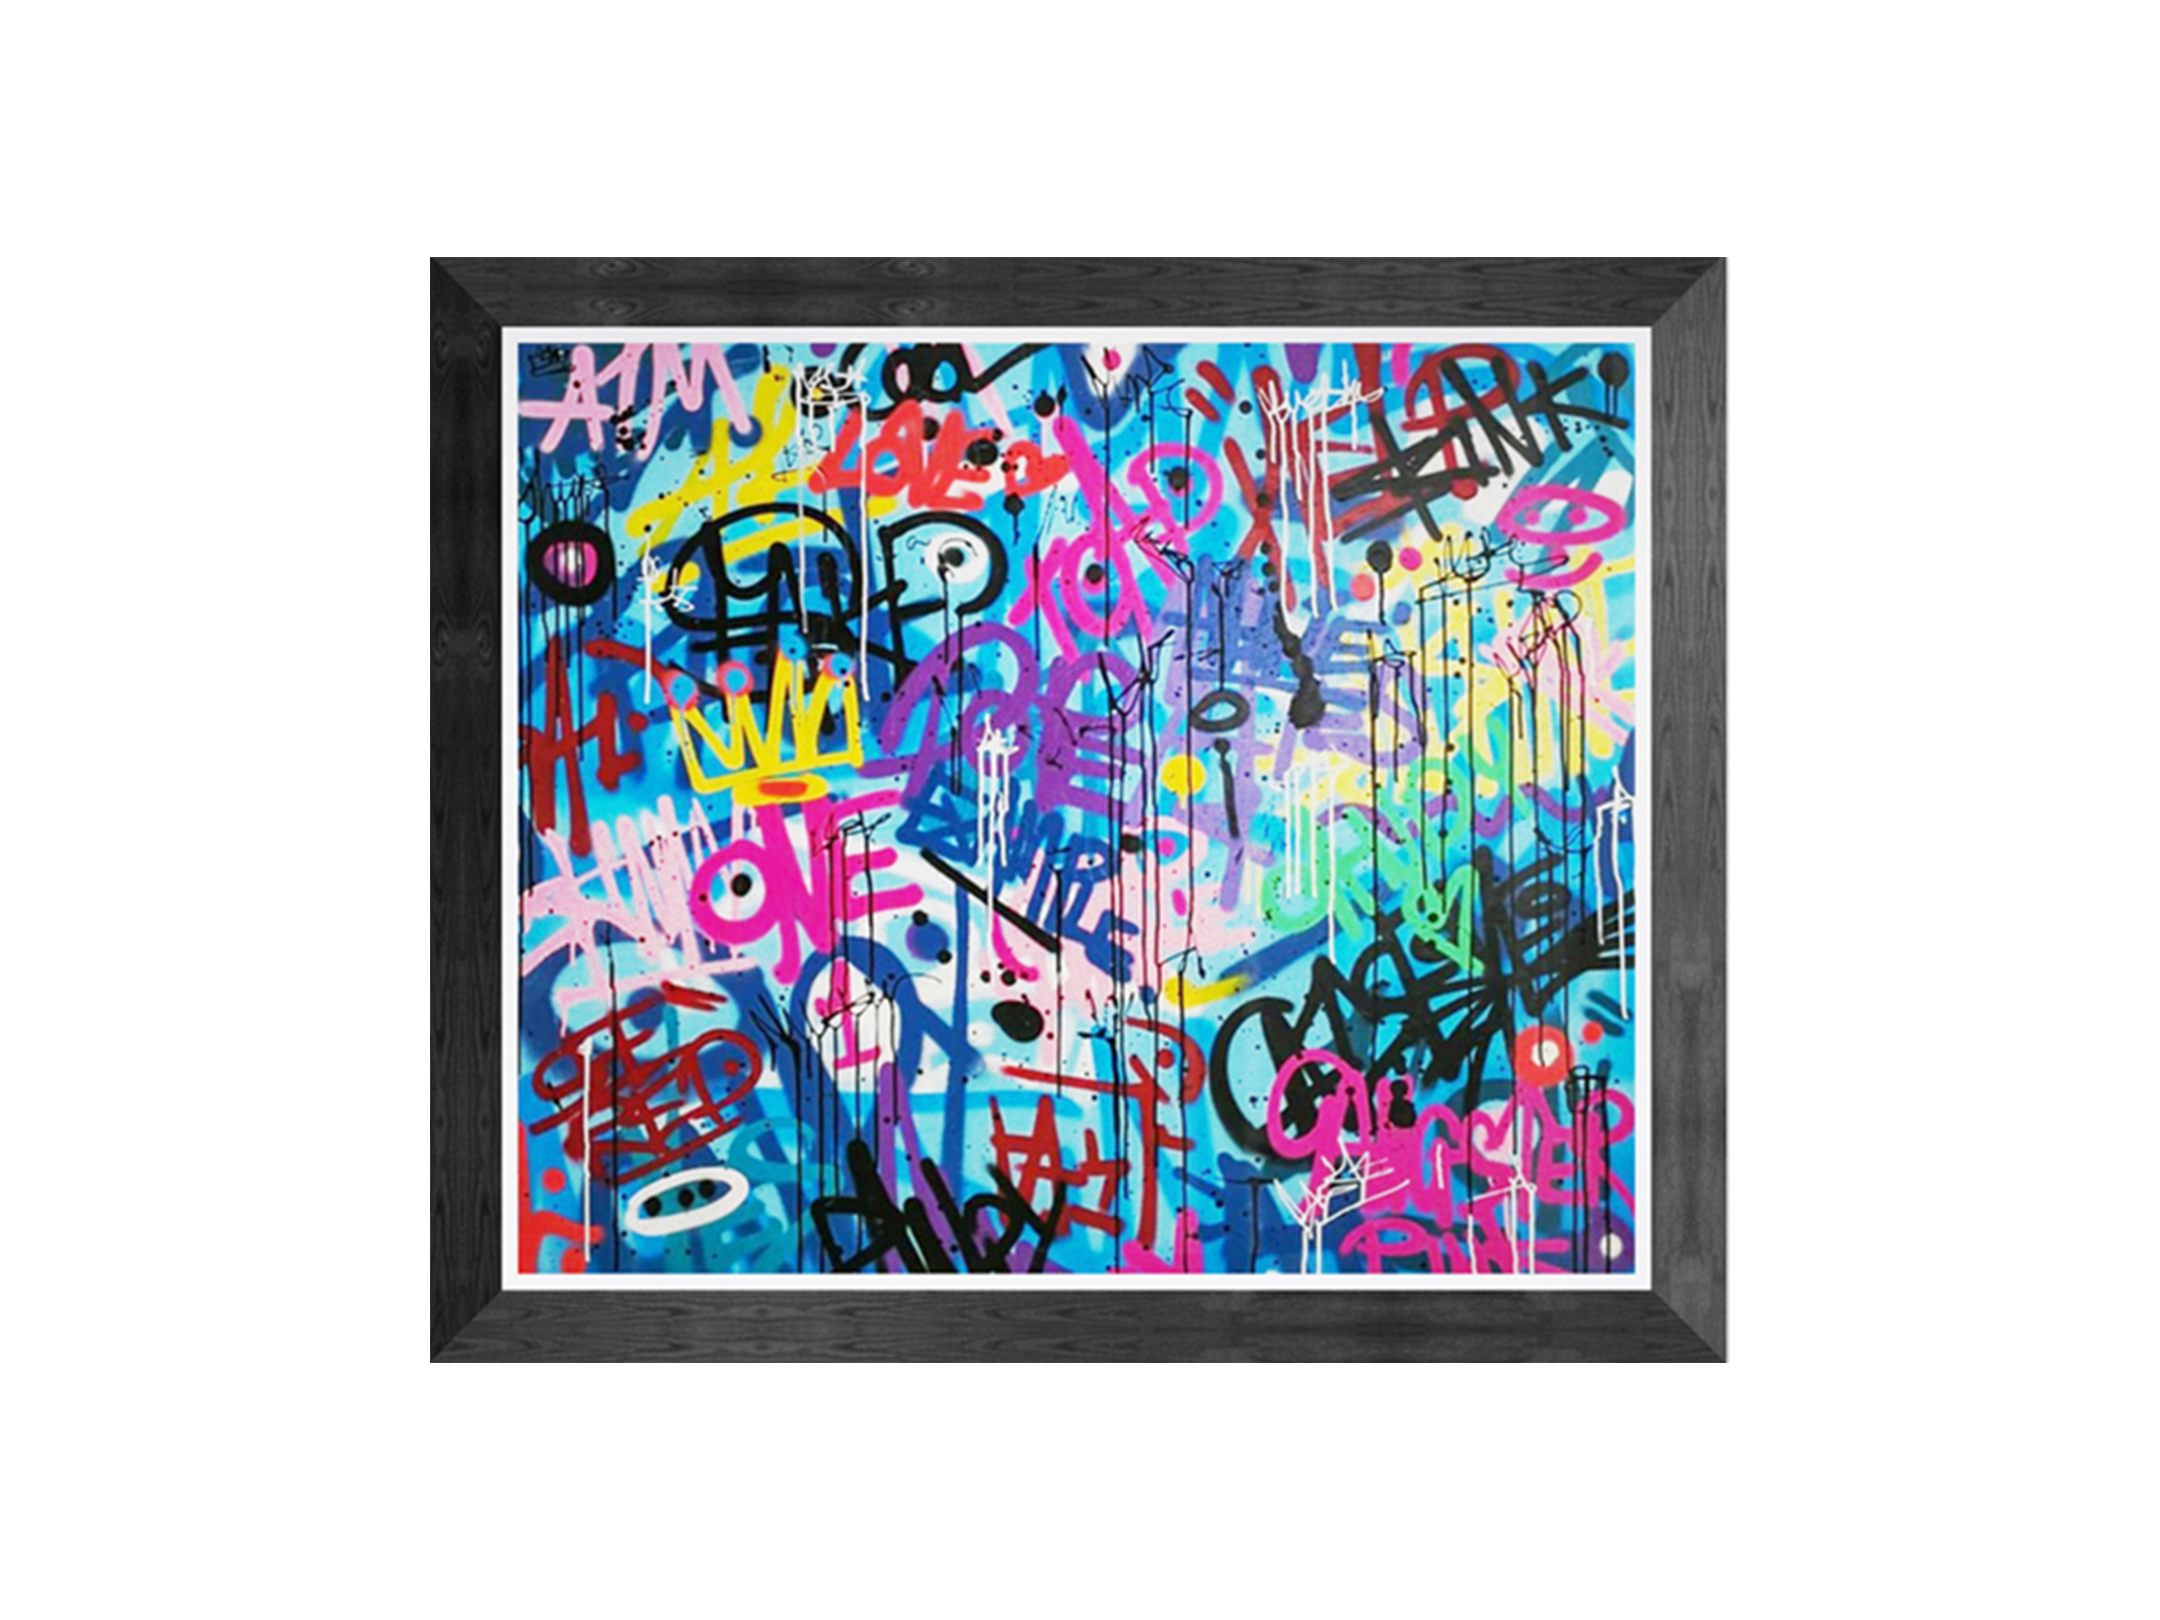 CREATIVE JUSTICE - Graffiti Tags On Canvas - Killer Pete Artist UK